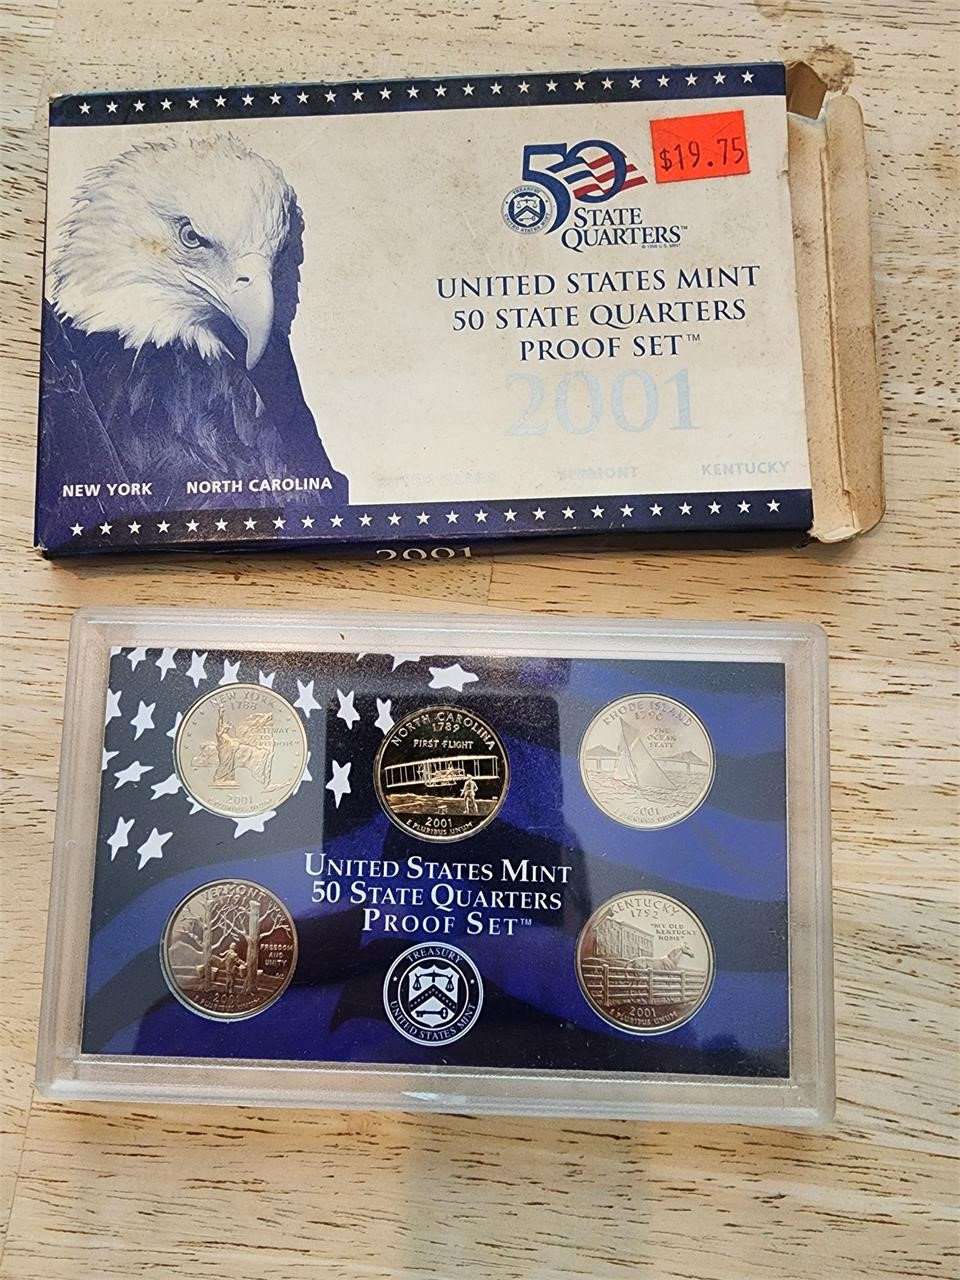 2001 State Quartes Mint set